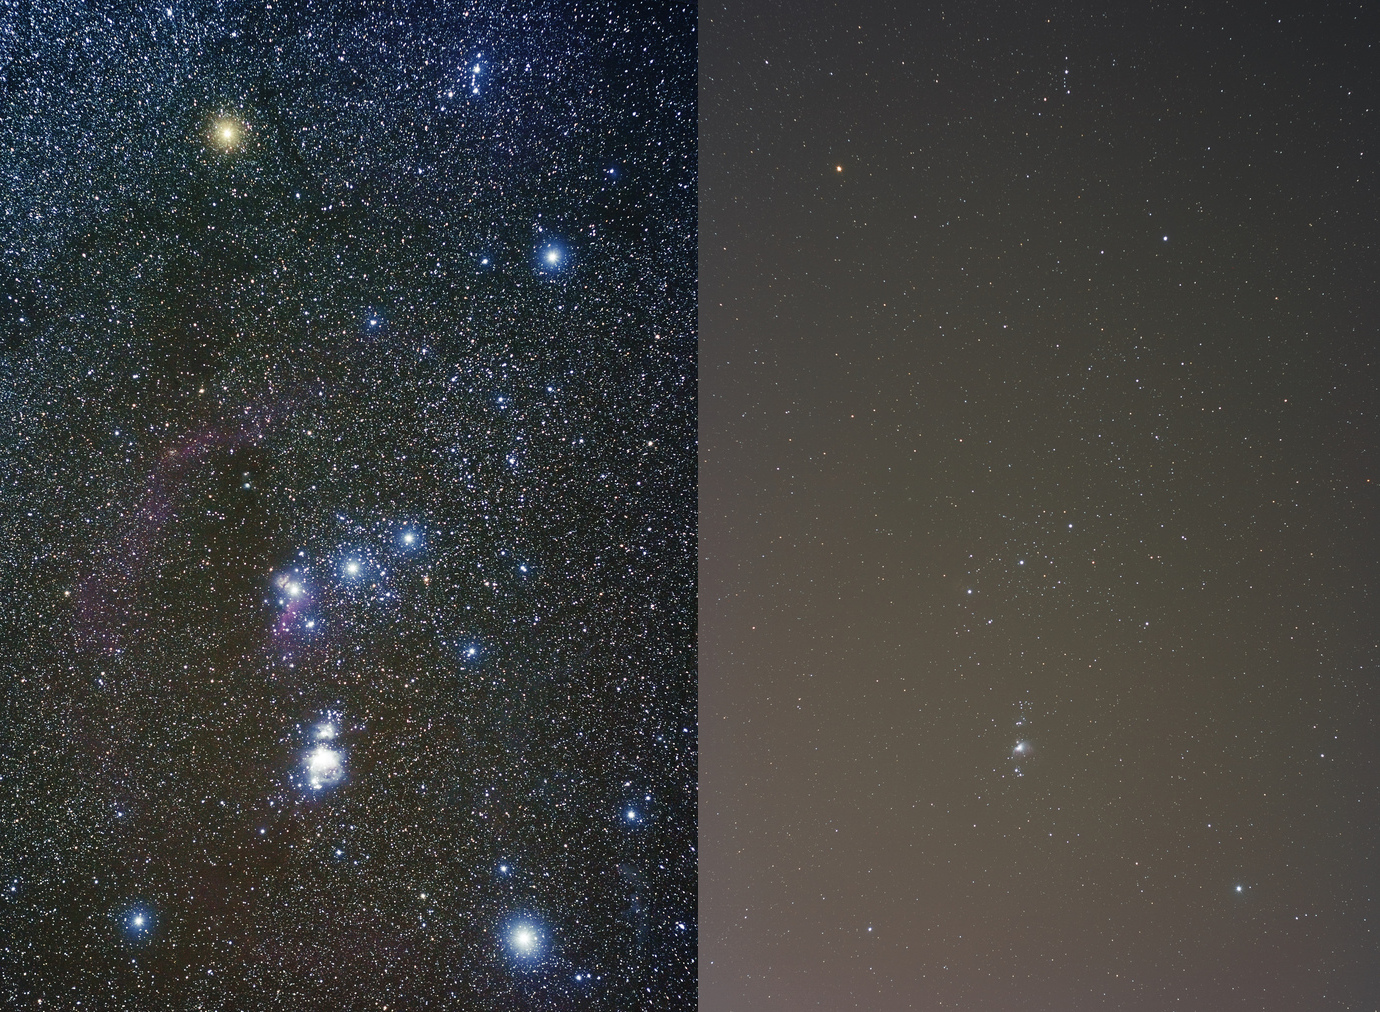 Constelación de Orión sen e con contaminación lumínica